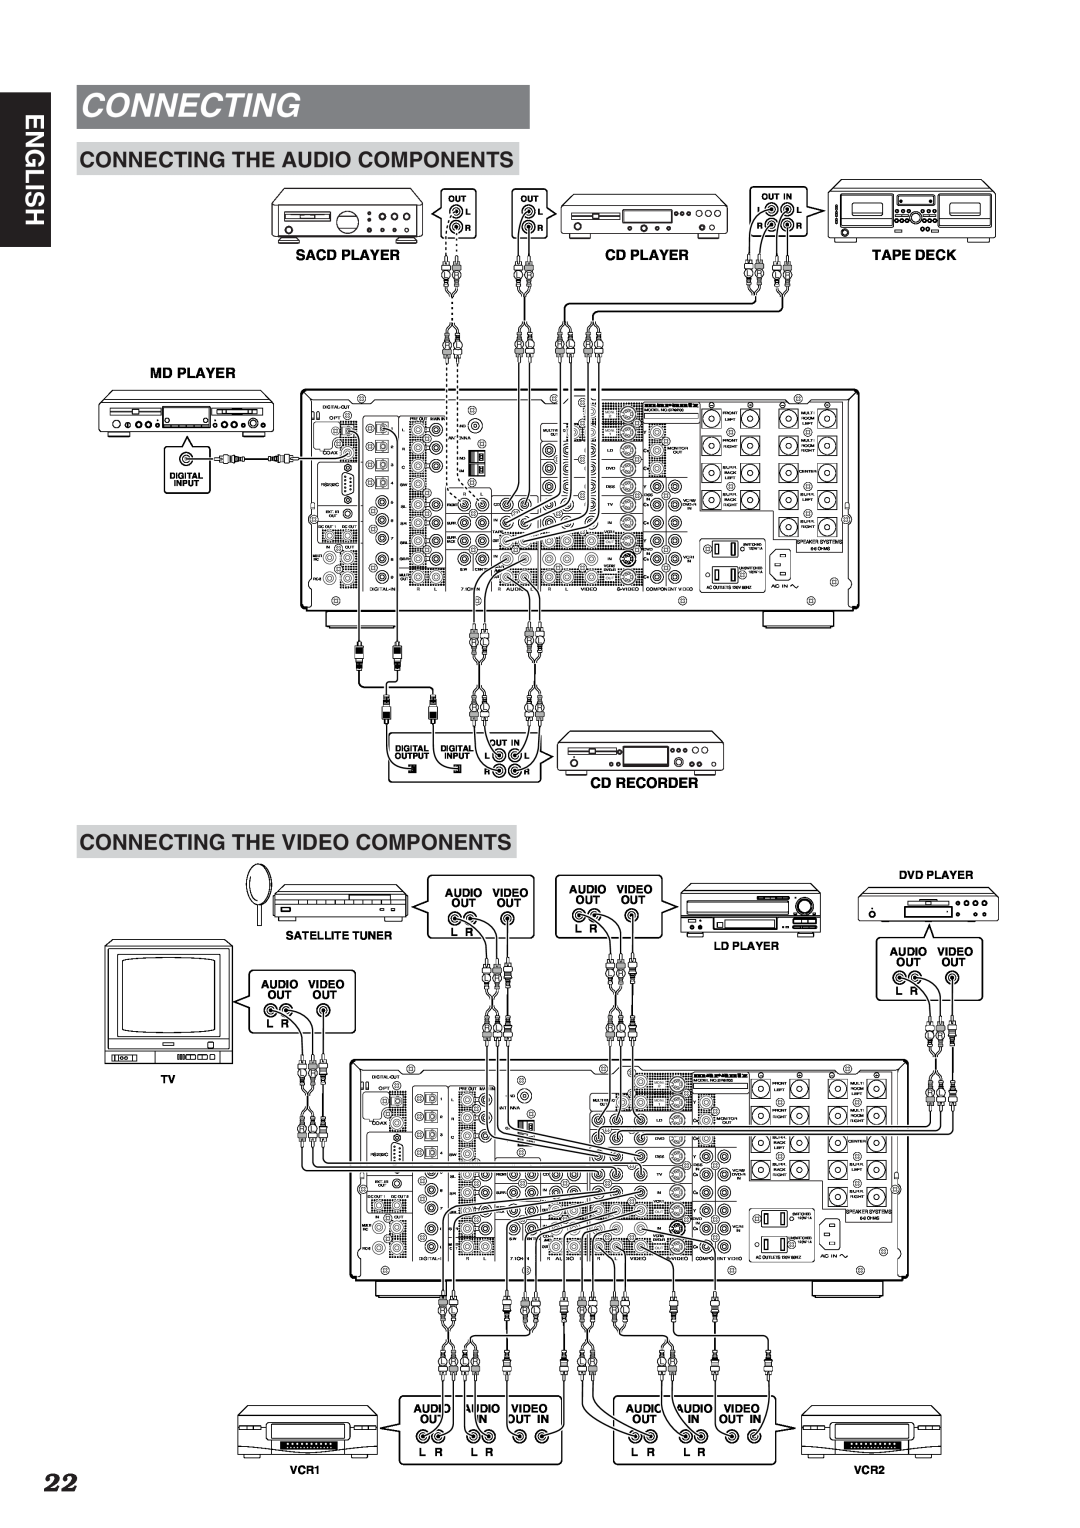 Marantz SR9200 manual English, Connecting The Audio Components, Connecting The Video Components 